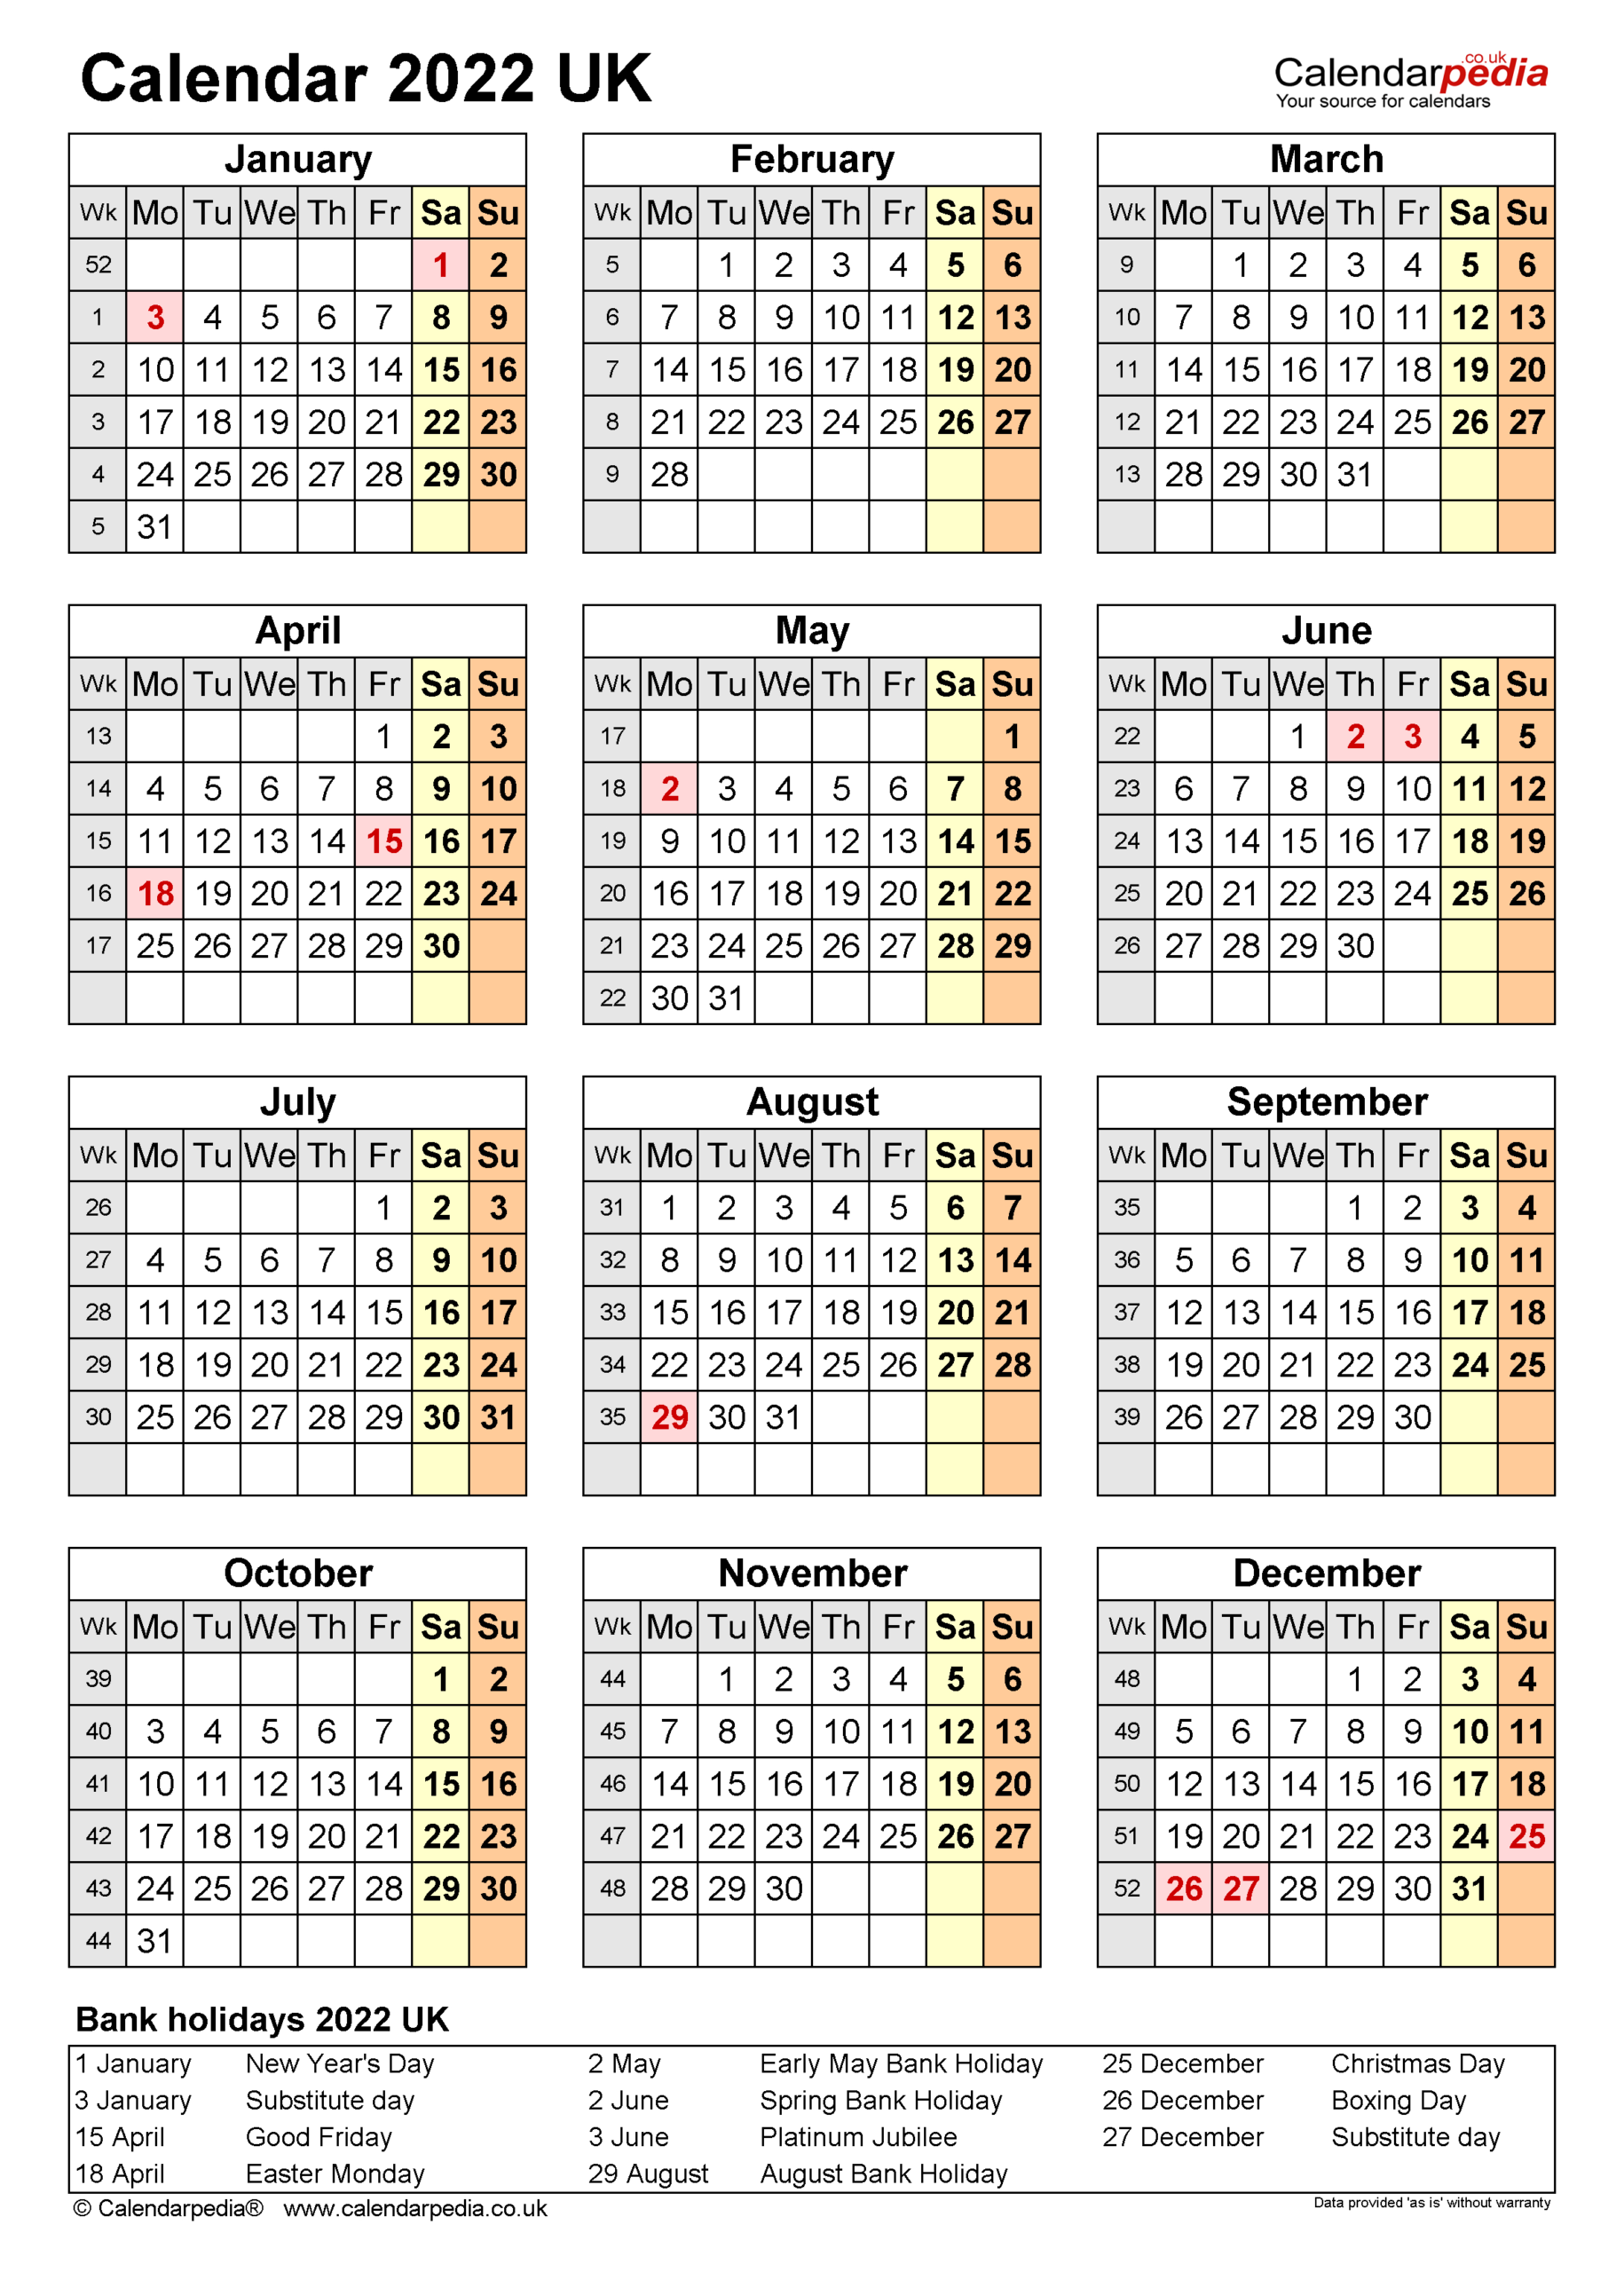 Calendar 2022 (Uk) - Free Printable Microsoft Excel Templates-Uk School Holiday Calendar 2022